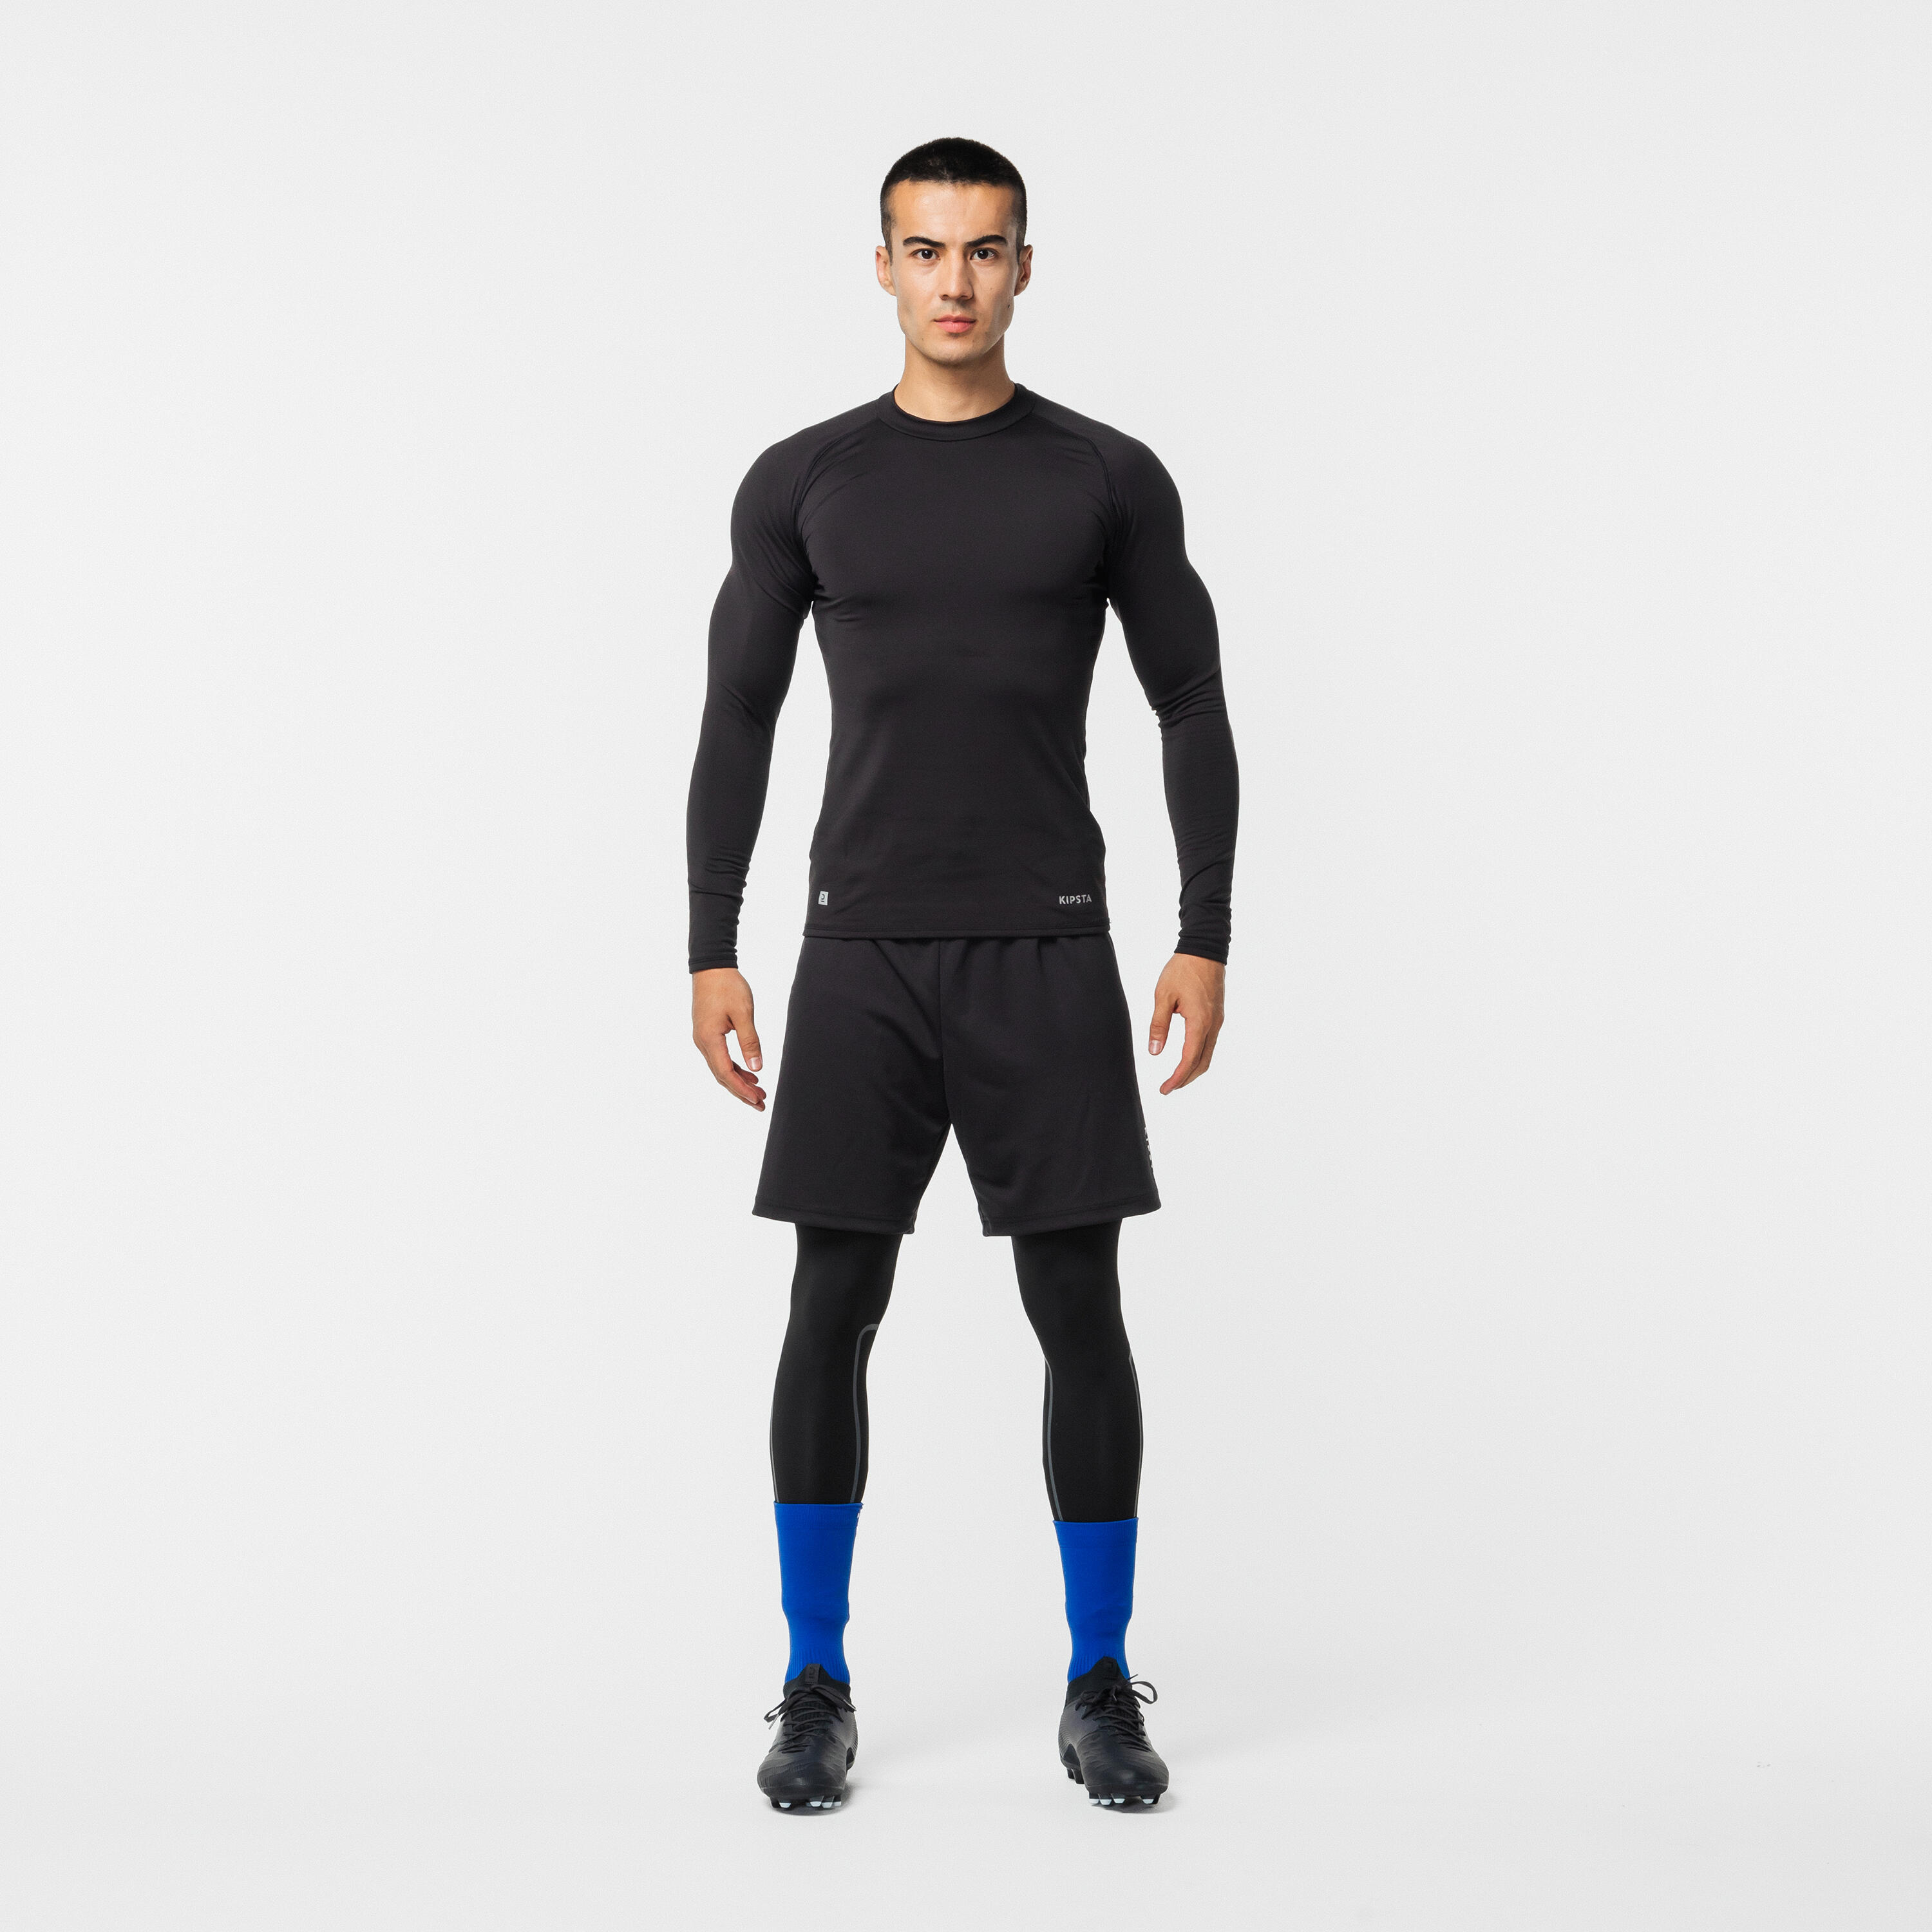 Adult Long-Sleeved Thermal Football Base Layer Top Keepcomfort 100 - Black 5/7